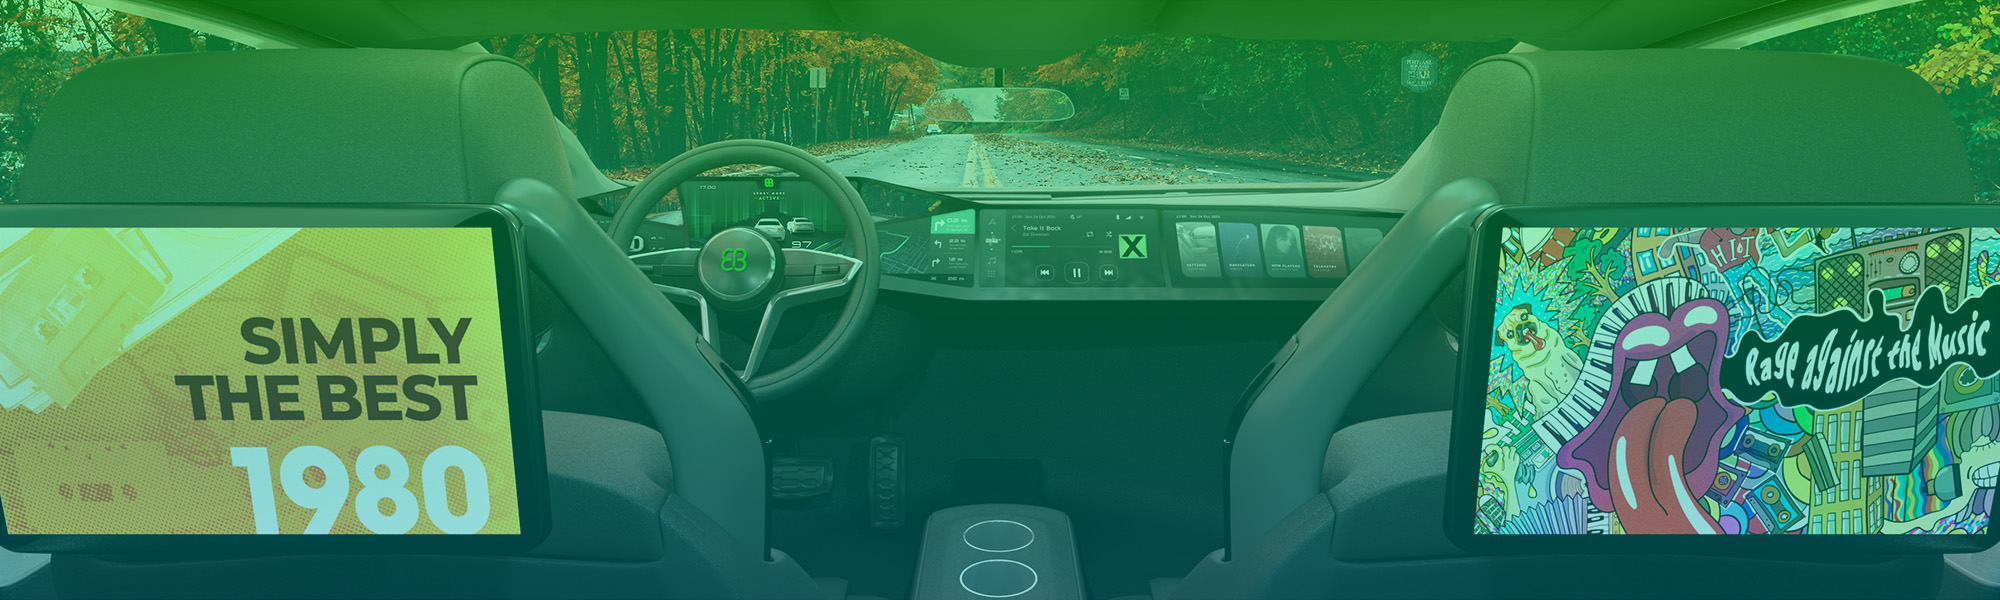 digital cockpit